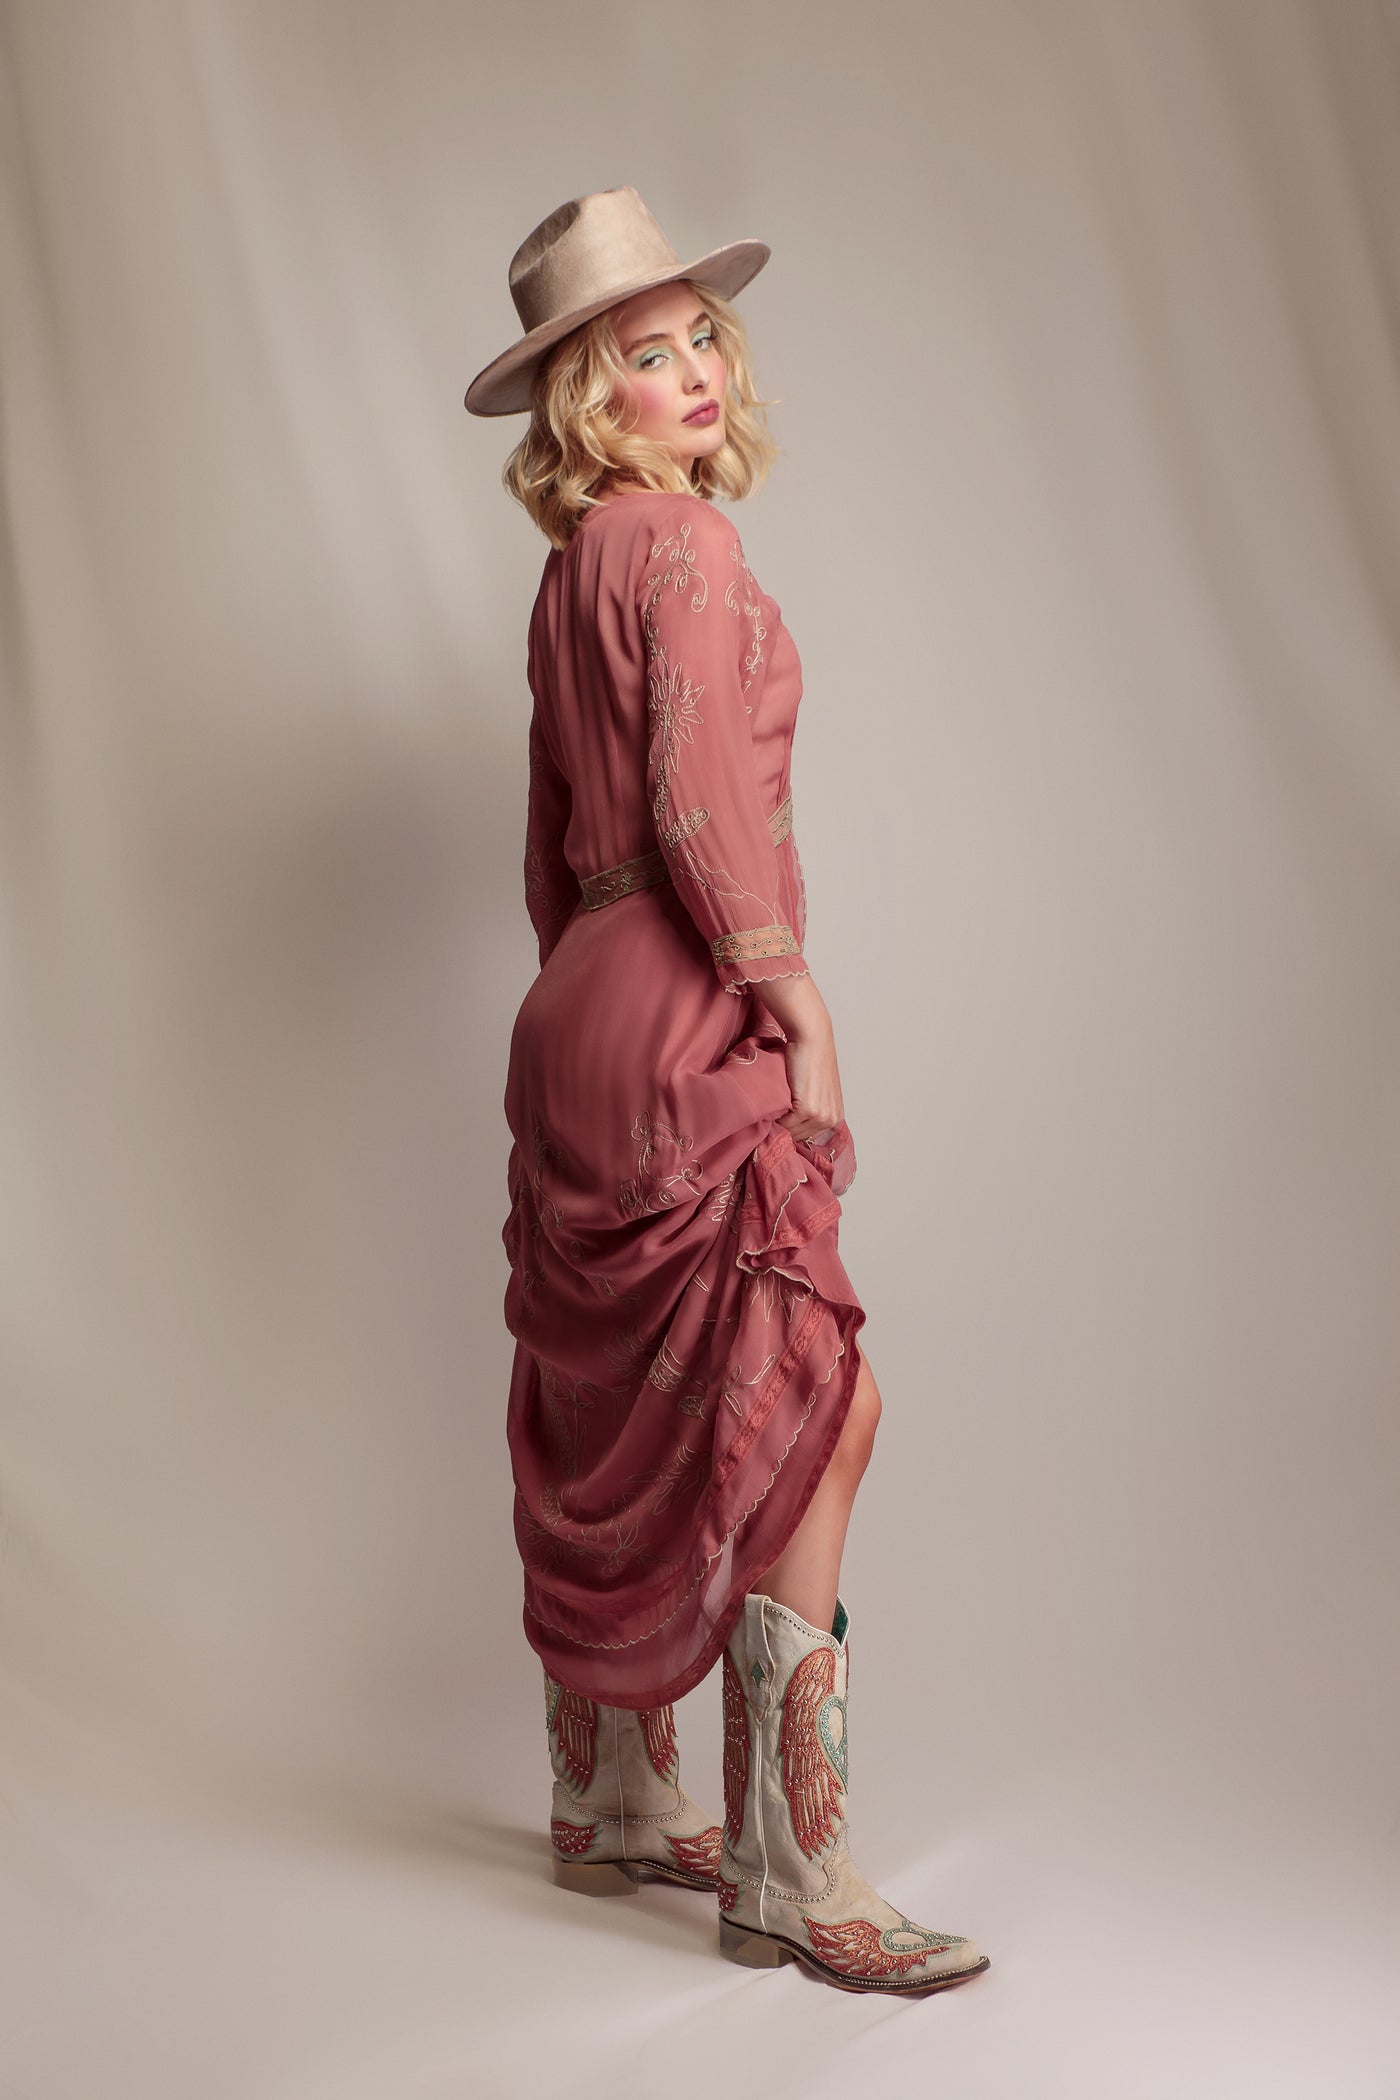 Edith Desert Oasis Dress in Pink-Beige by Nataya